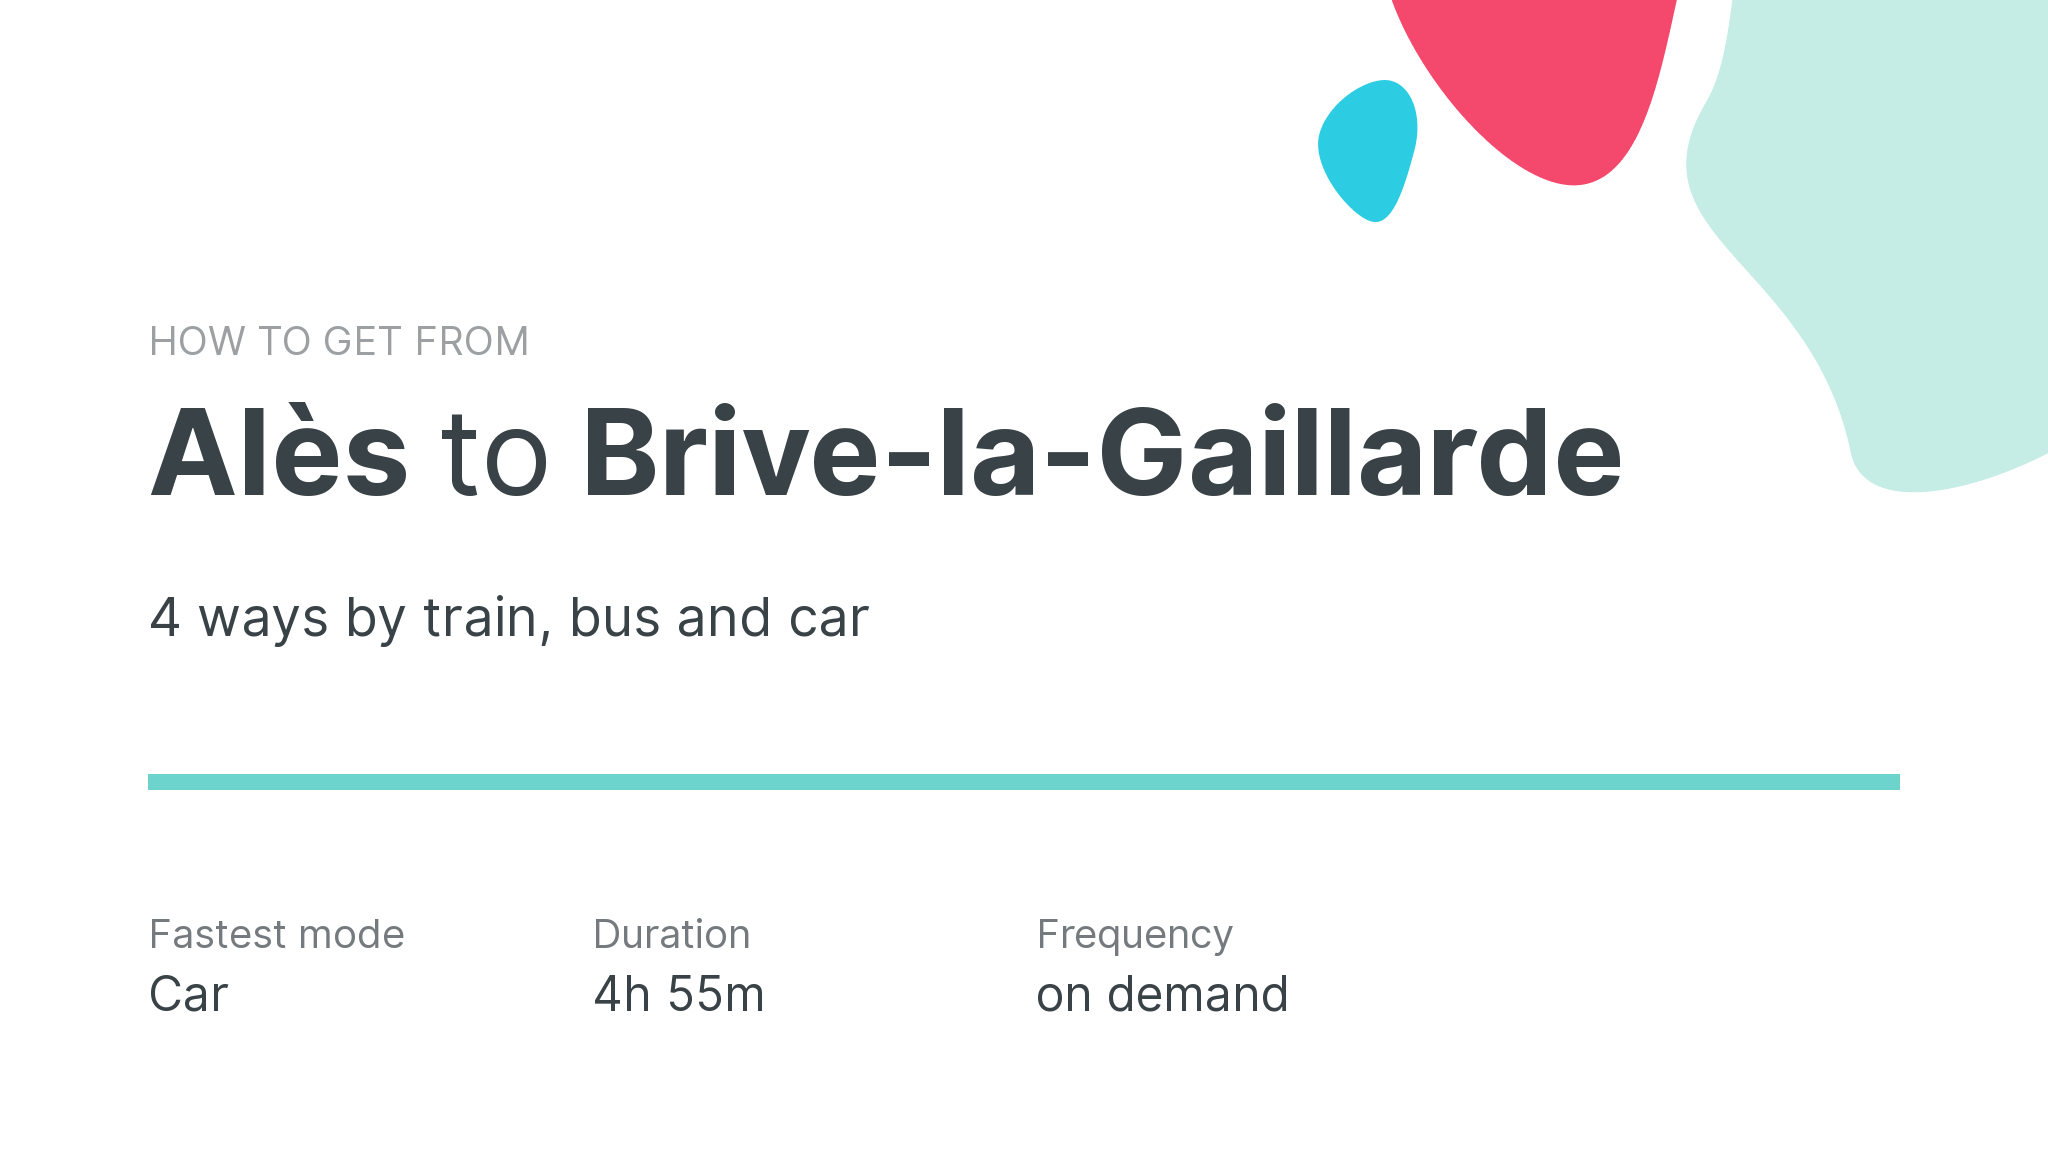 How do I get from Alès to Brive-la-Gaillarde